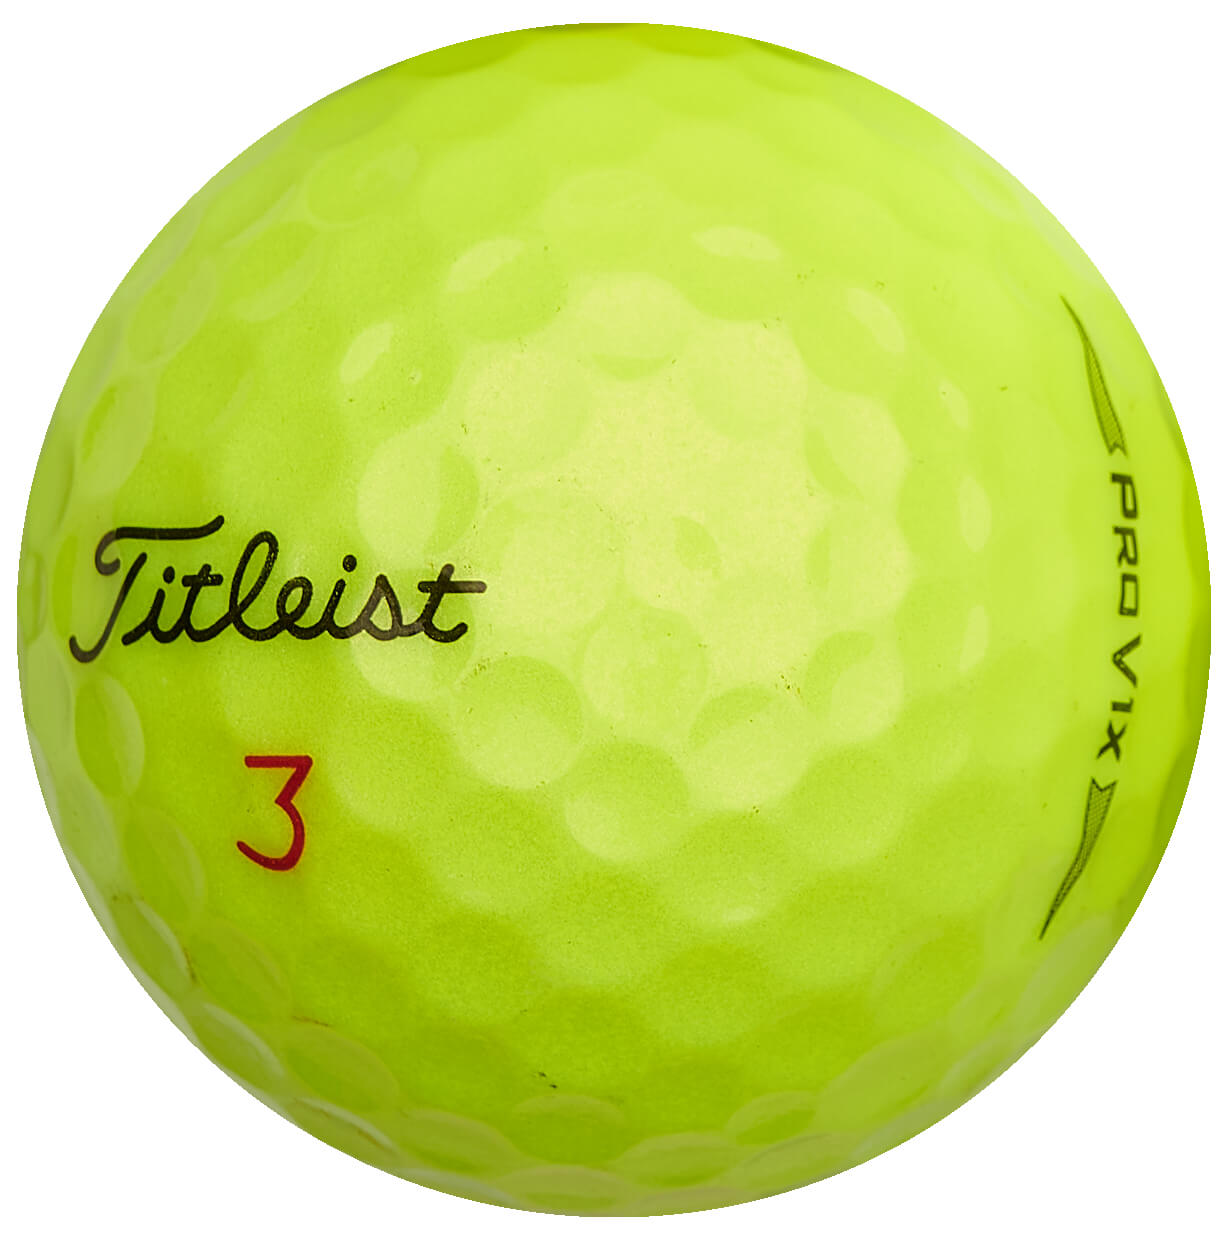 25 Titleist Pro V1x Lakeballs, yellow